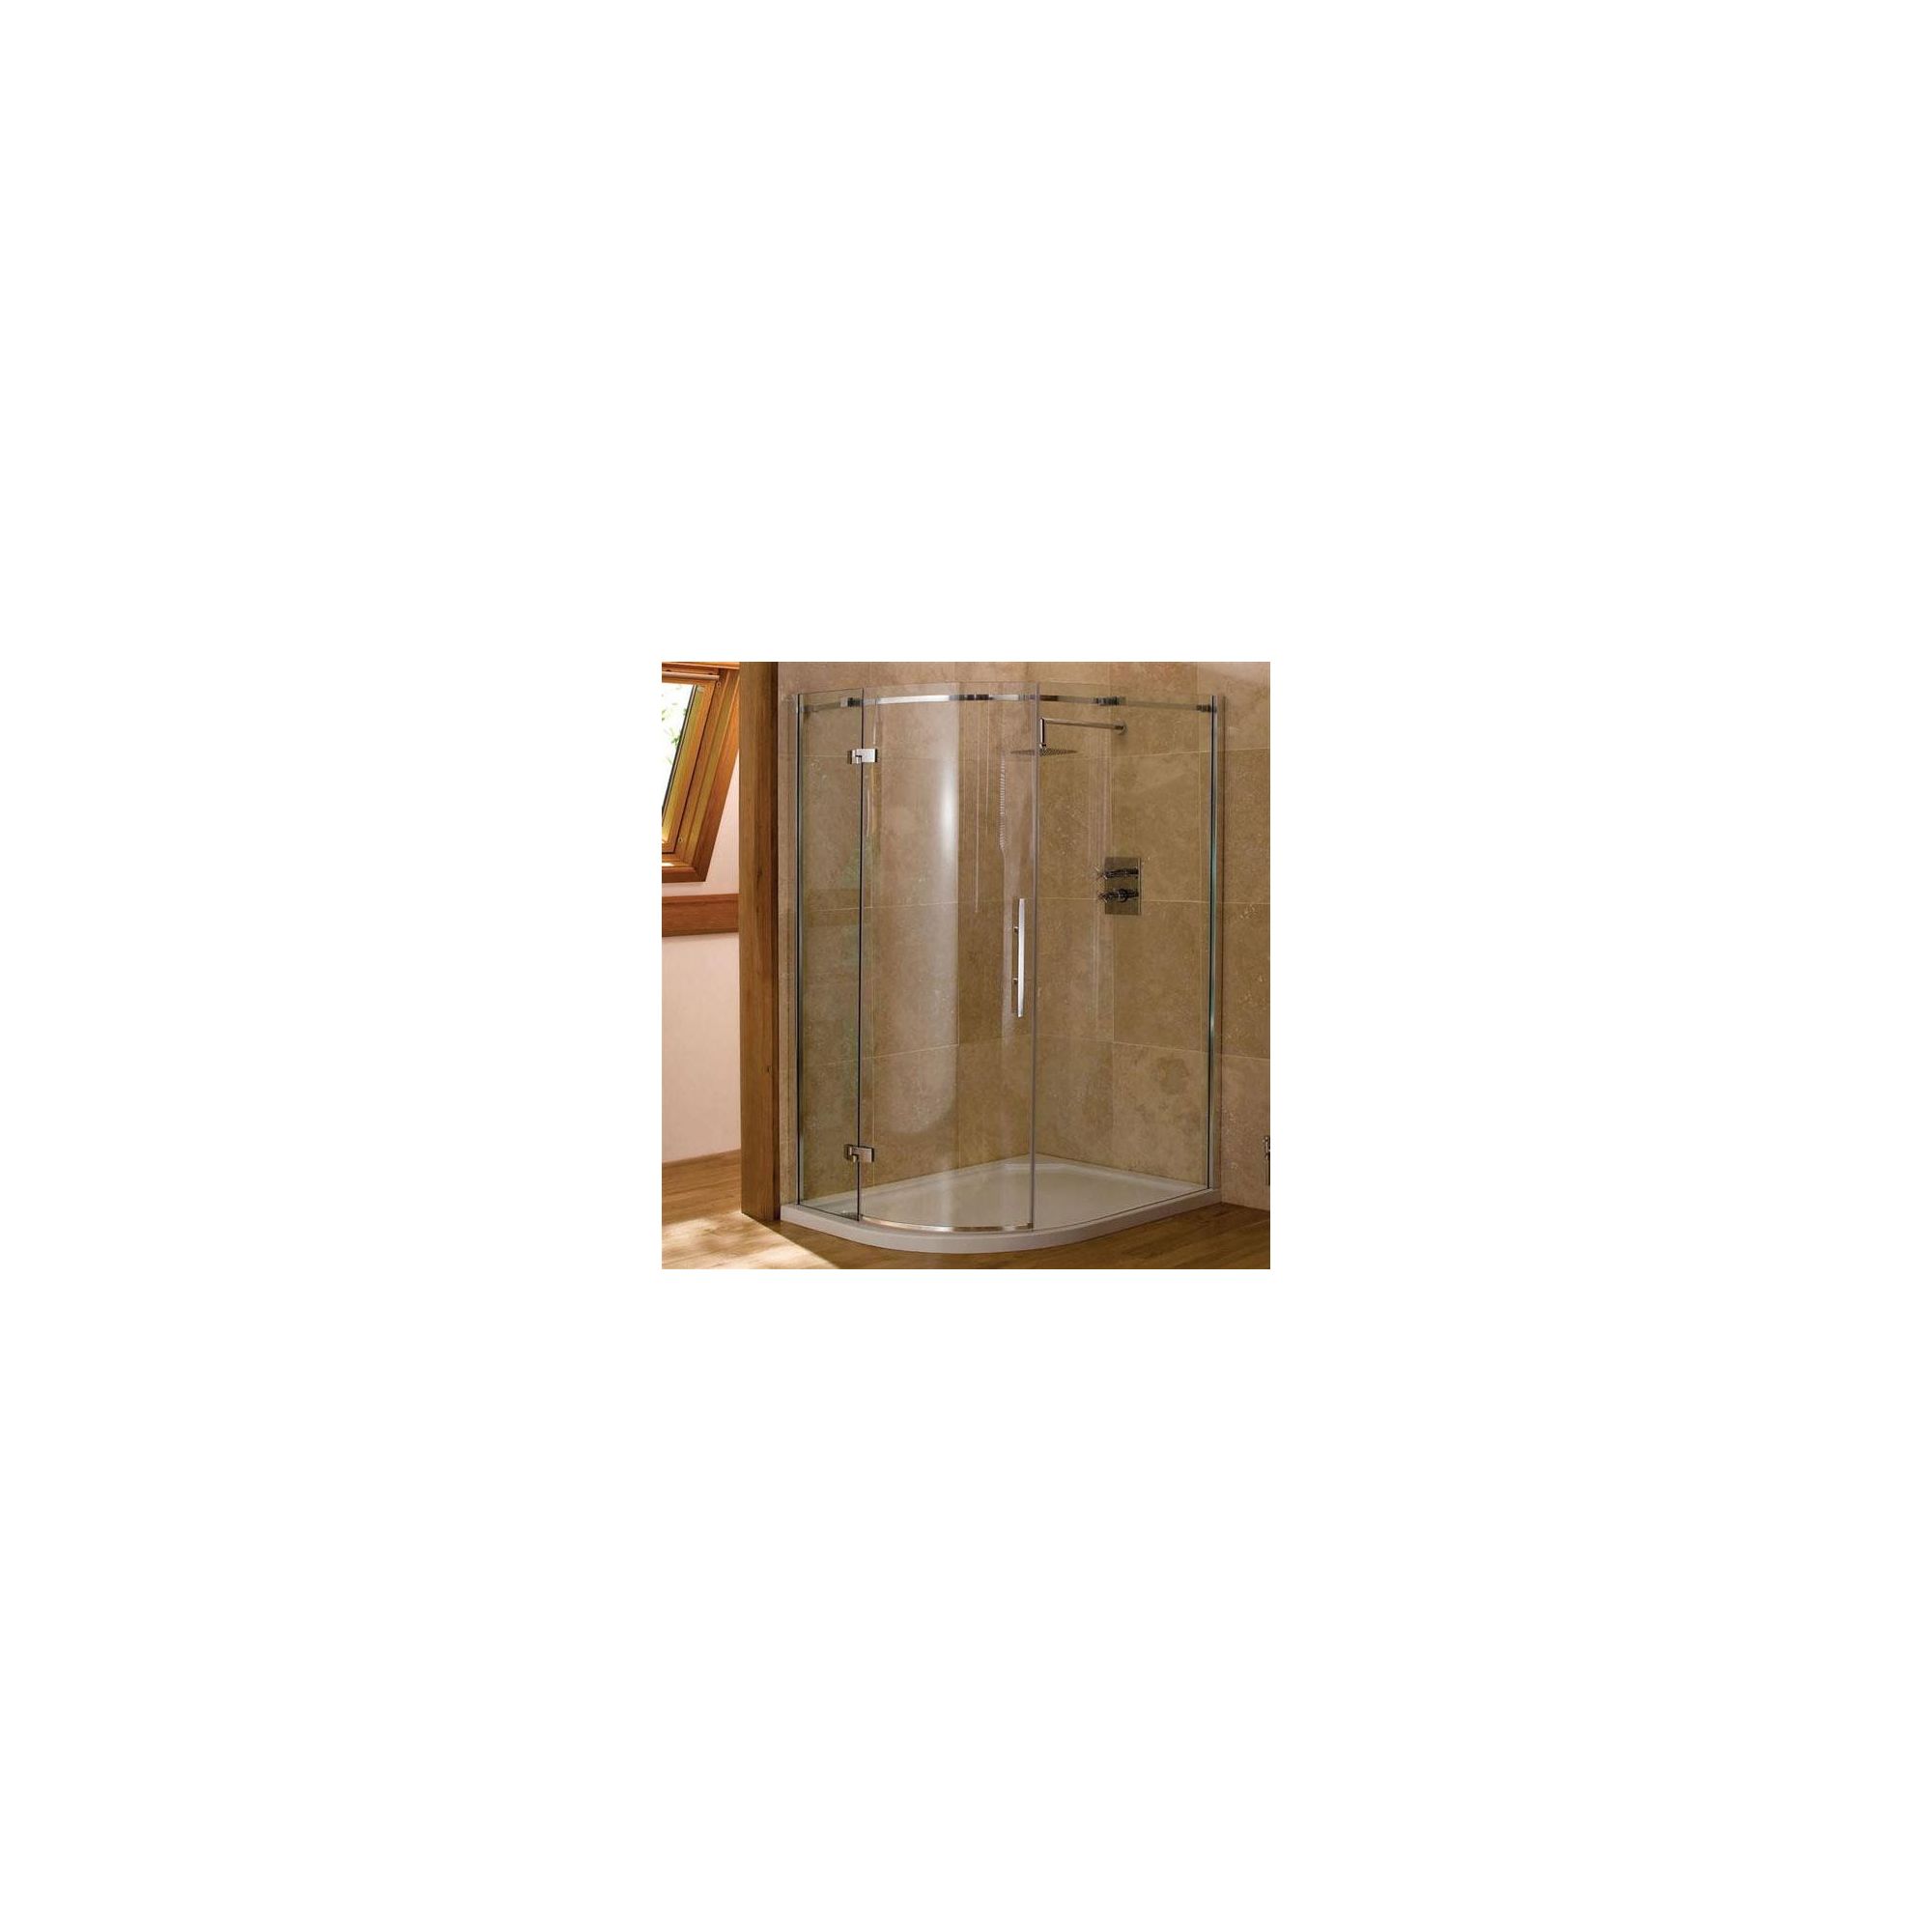 Merlyn Vivid Nine Offset Quadrant Shower Door, 1200mm x 800mm, Right Handed, 8mm Glass at Tesco Direct